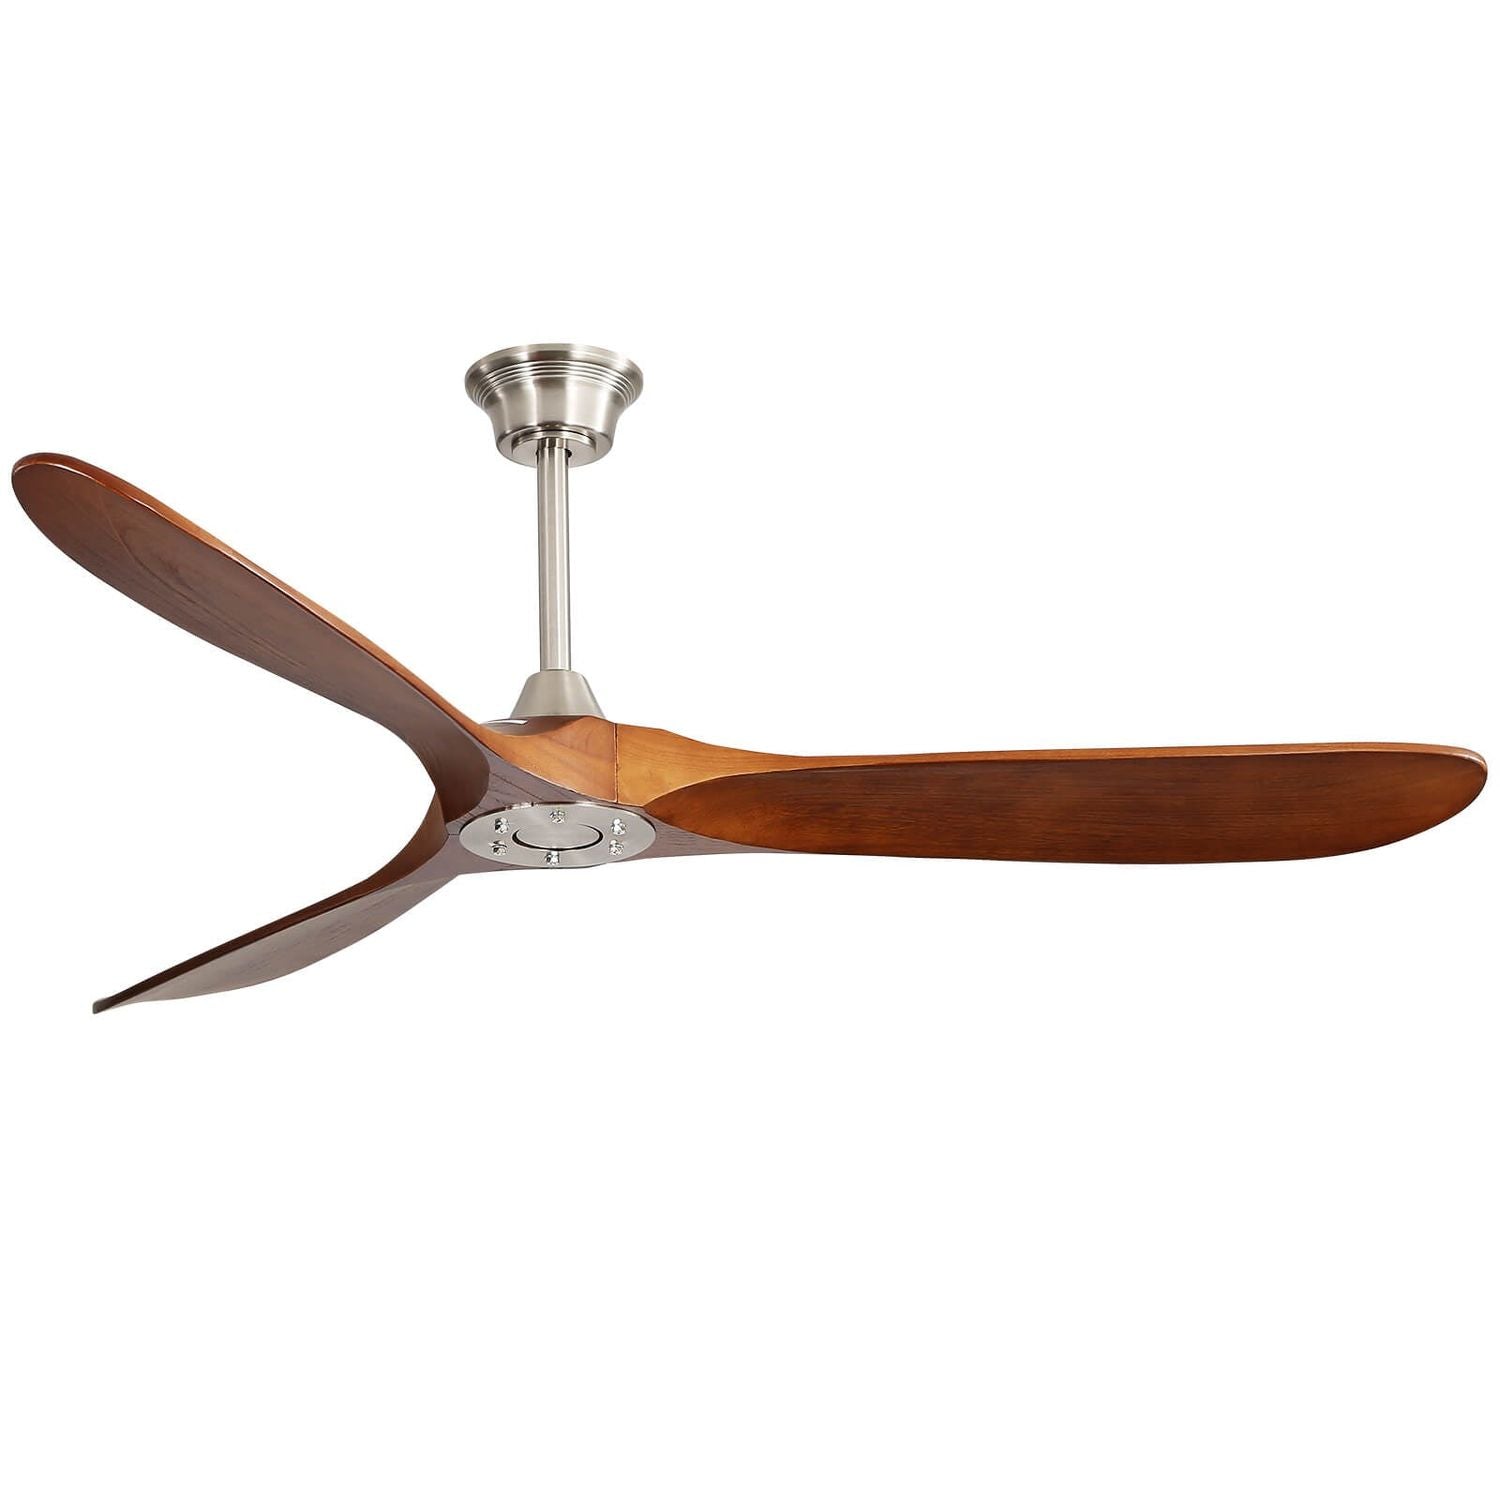 60 Inch Wood Blade Ceiling Fan with Remote - Brushed Nickel, Walnut Blades